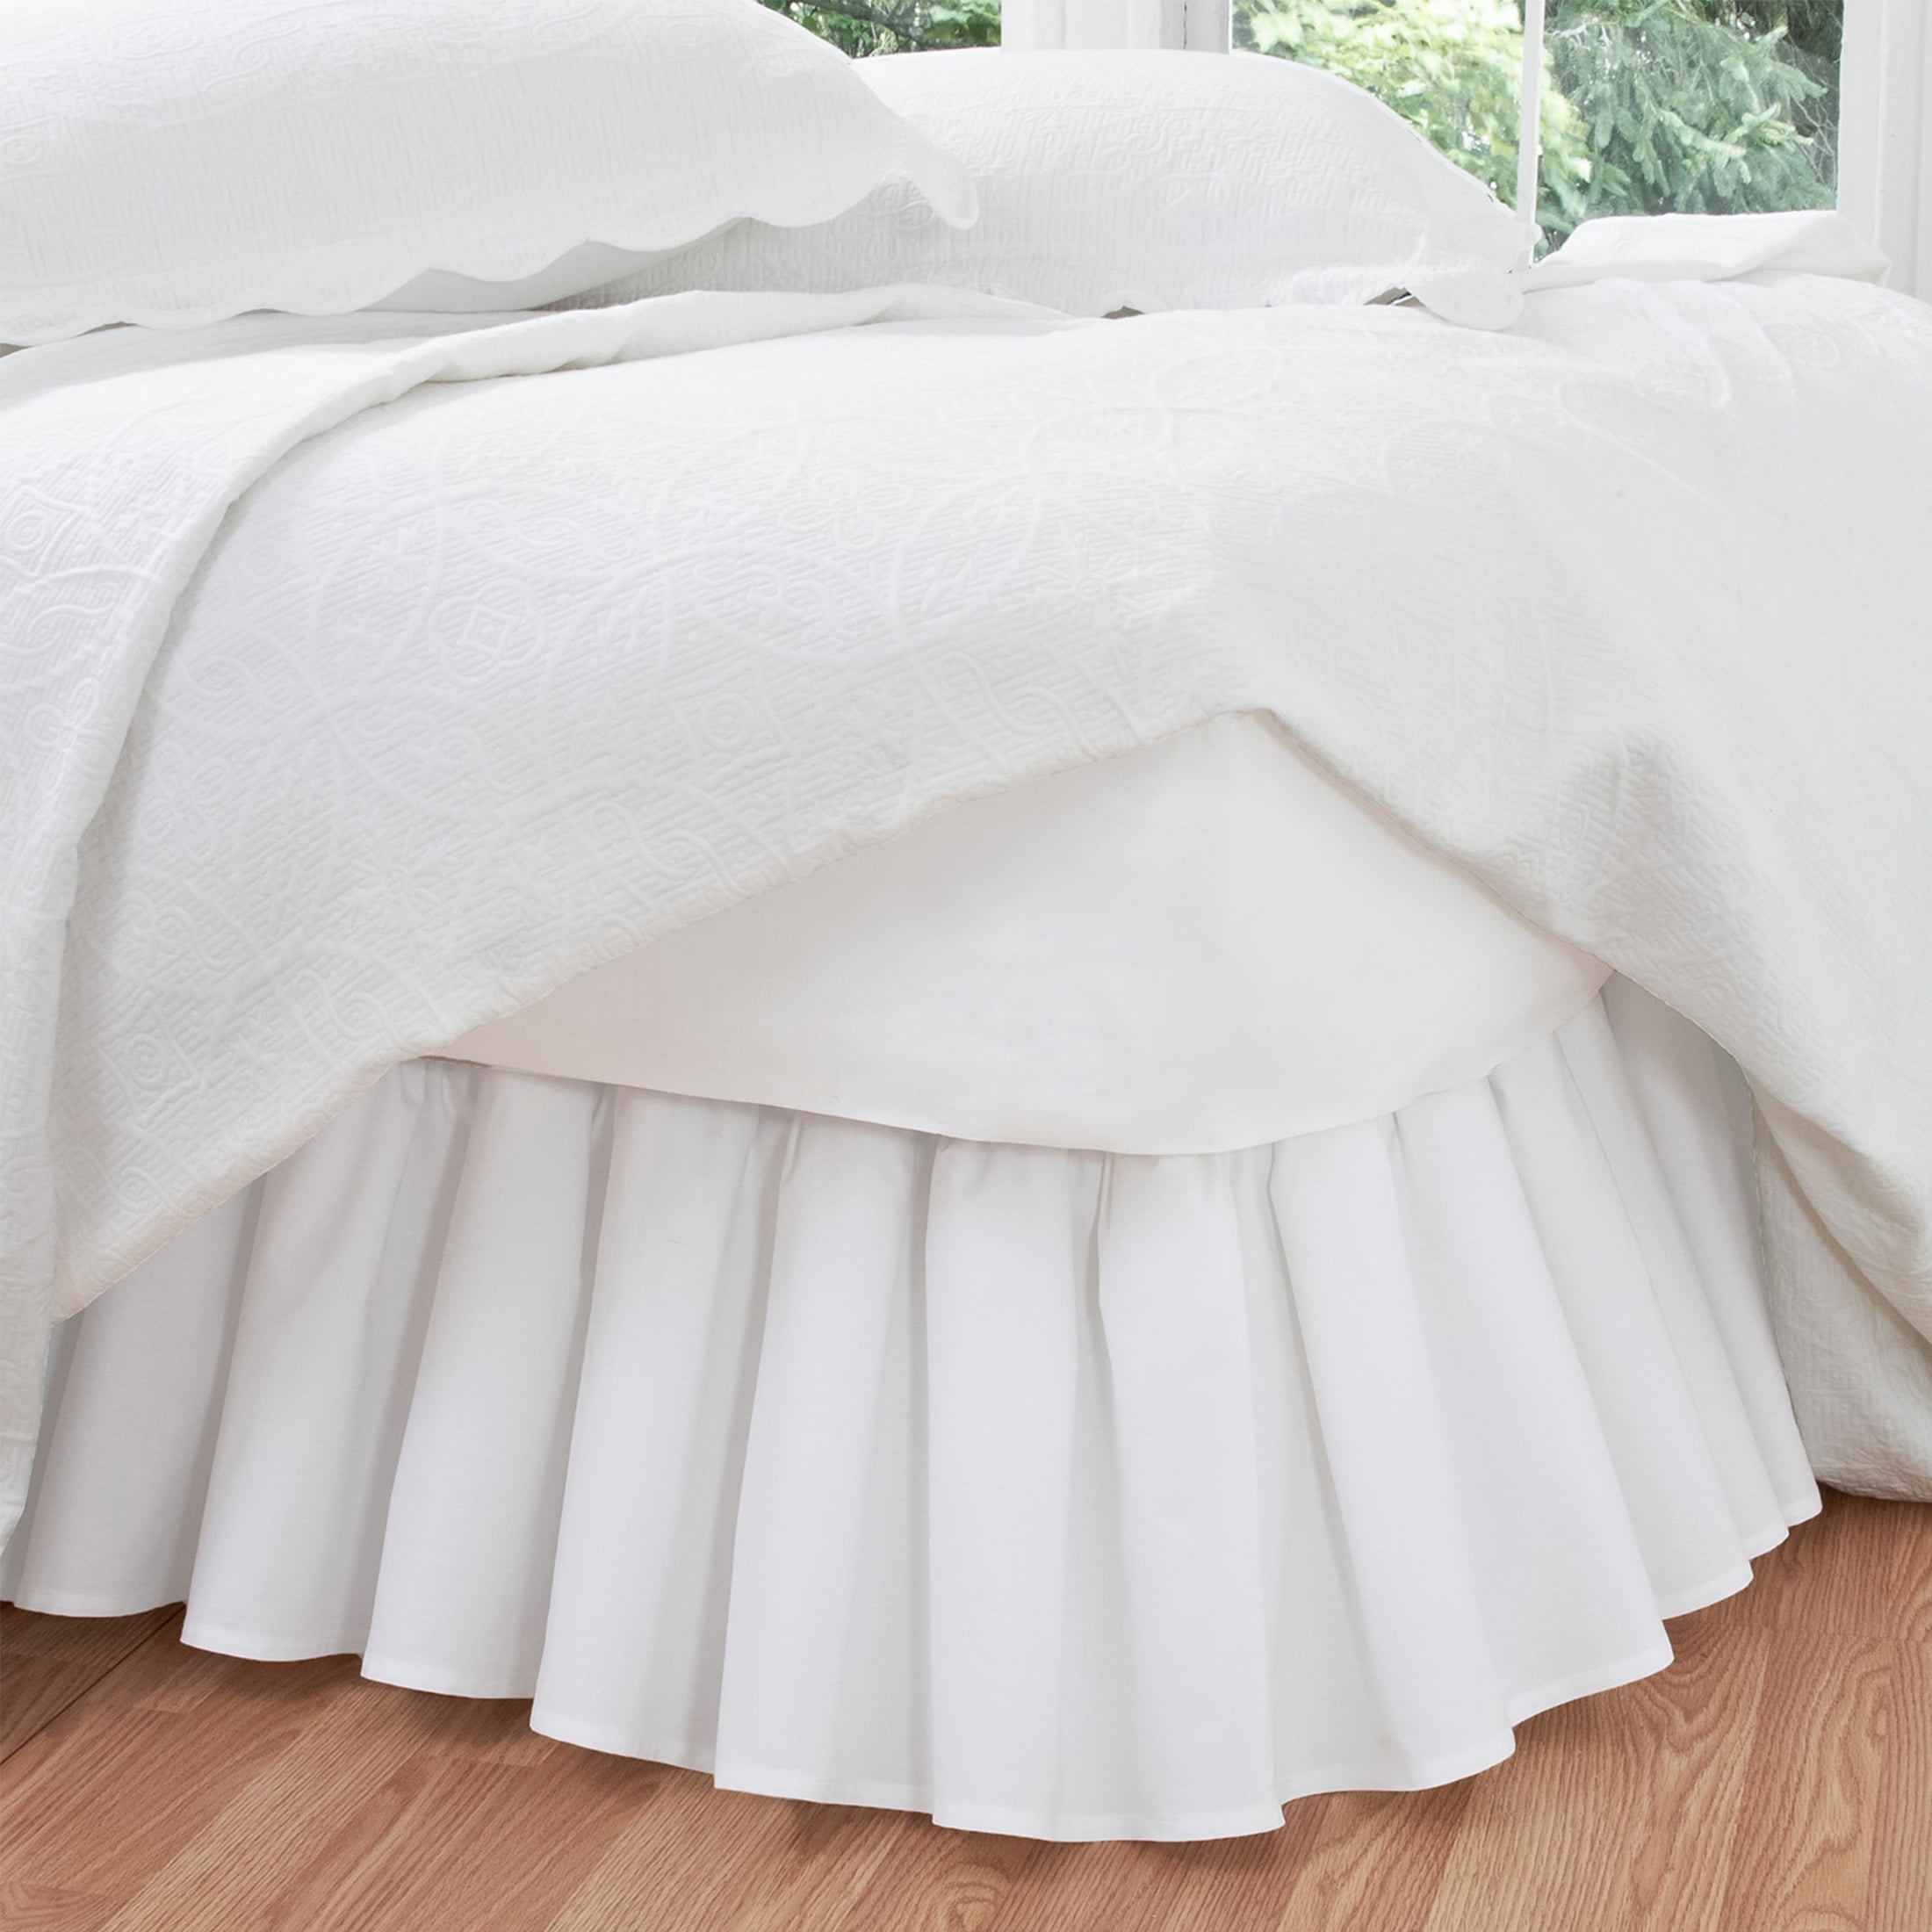 Wamsutta Button Pleat Cal King Bed Skirt in Ivory 15" Drop Split Corners Cotton 